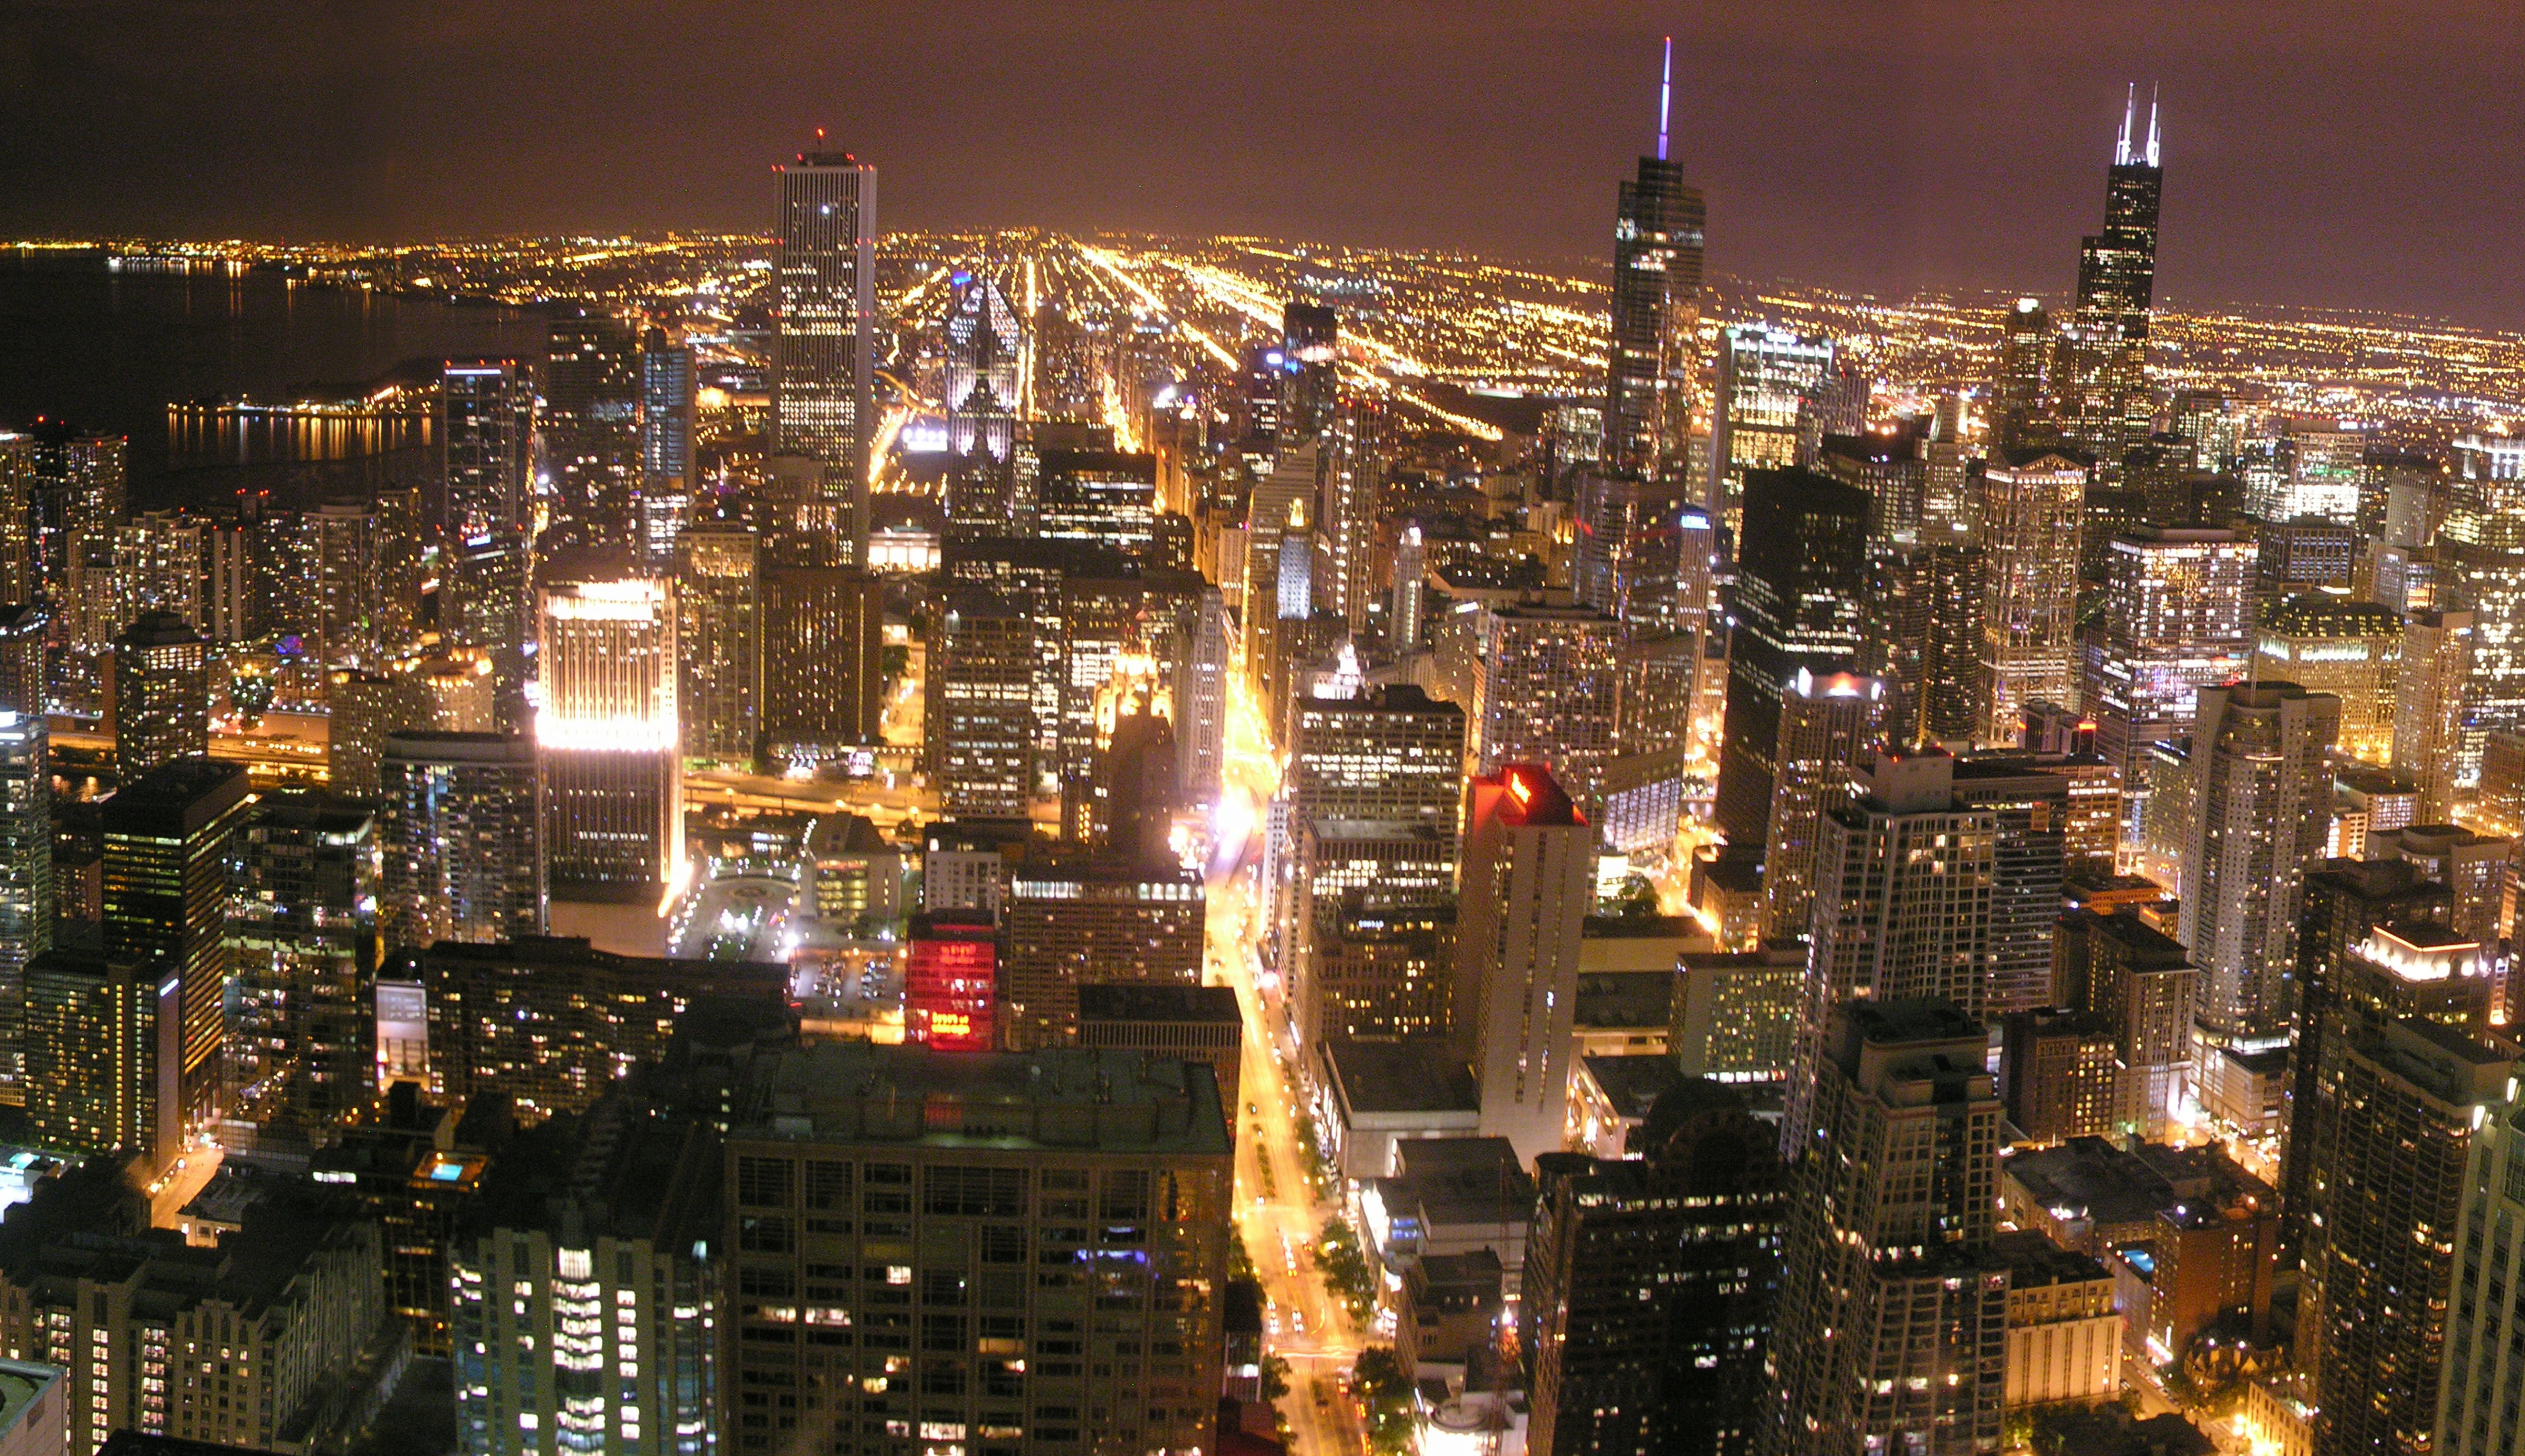 Chicago from the 96th floor of John Hancock Center. Credit: Lol19